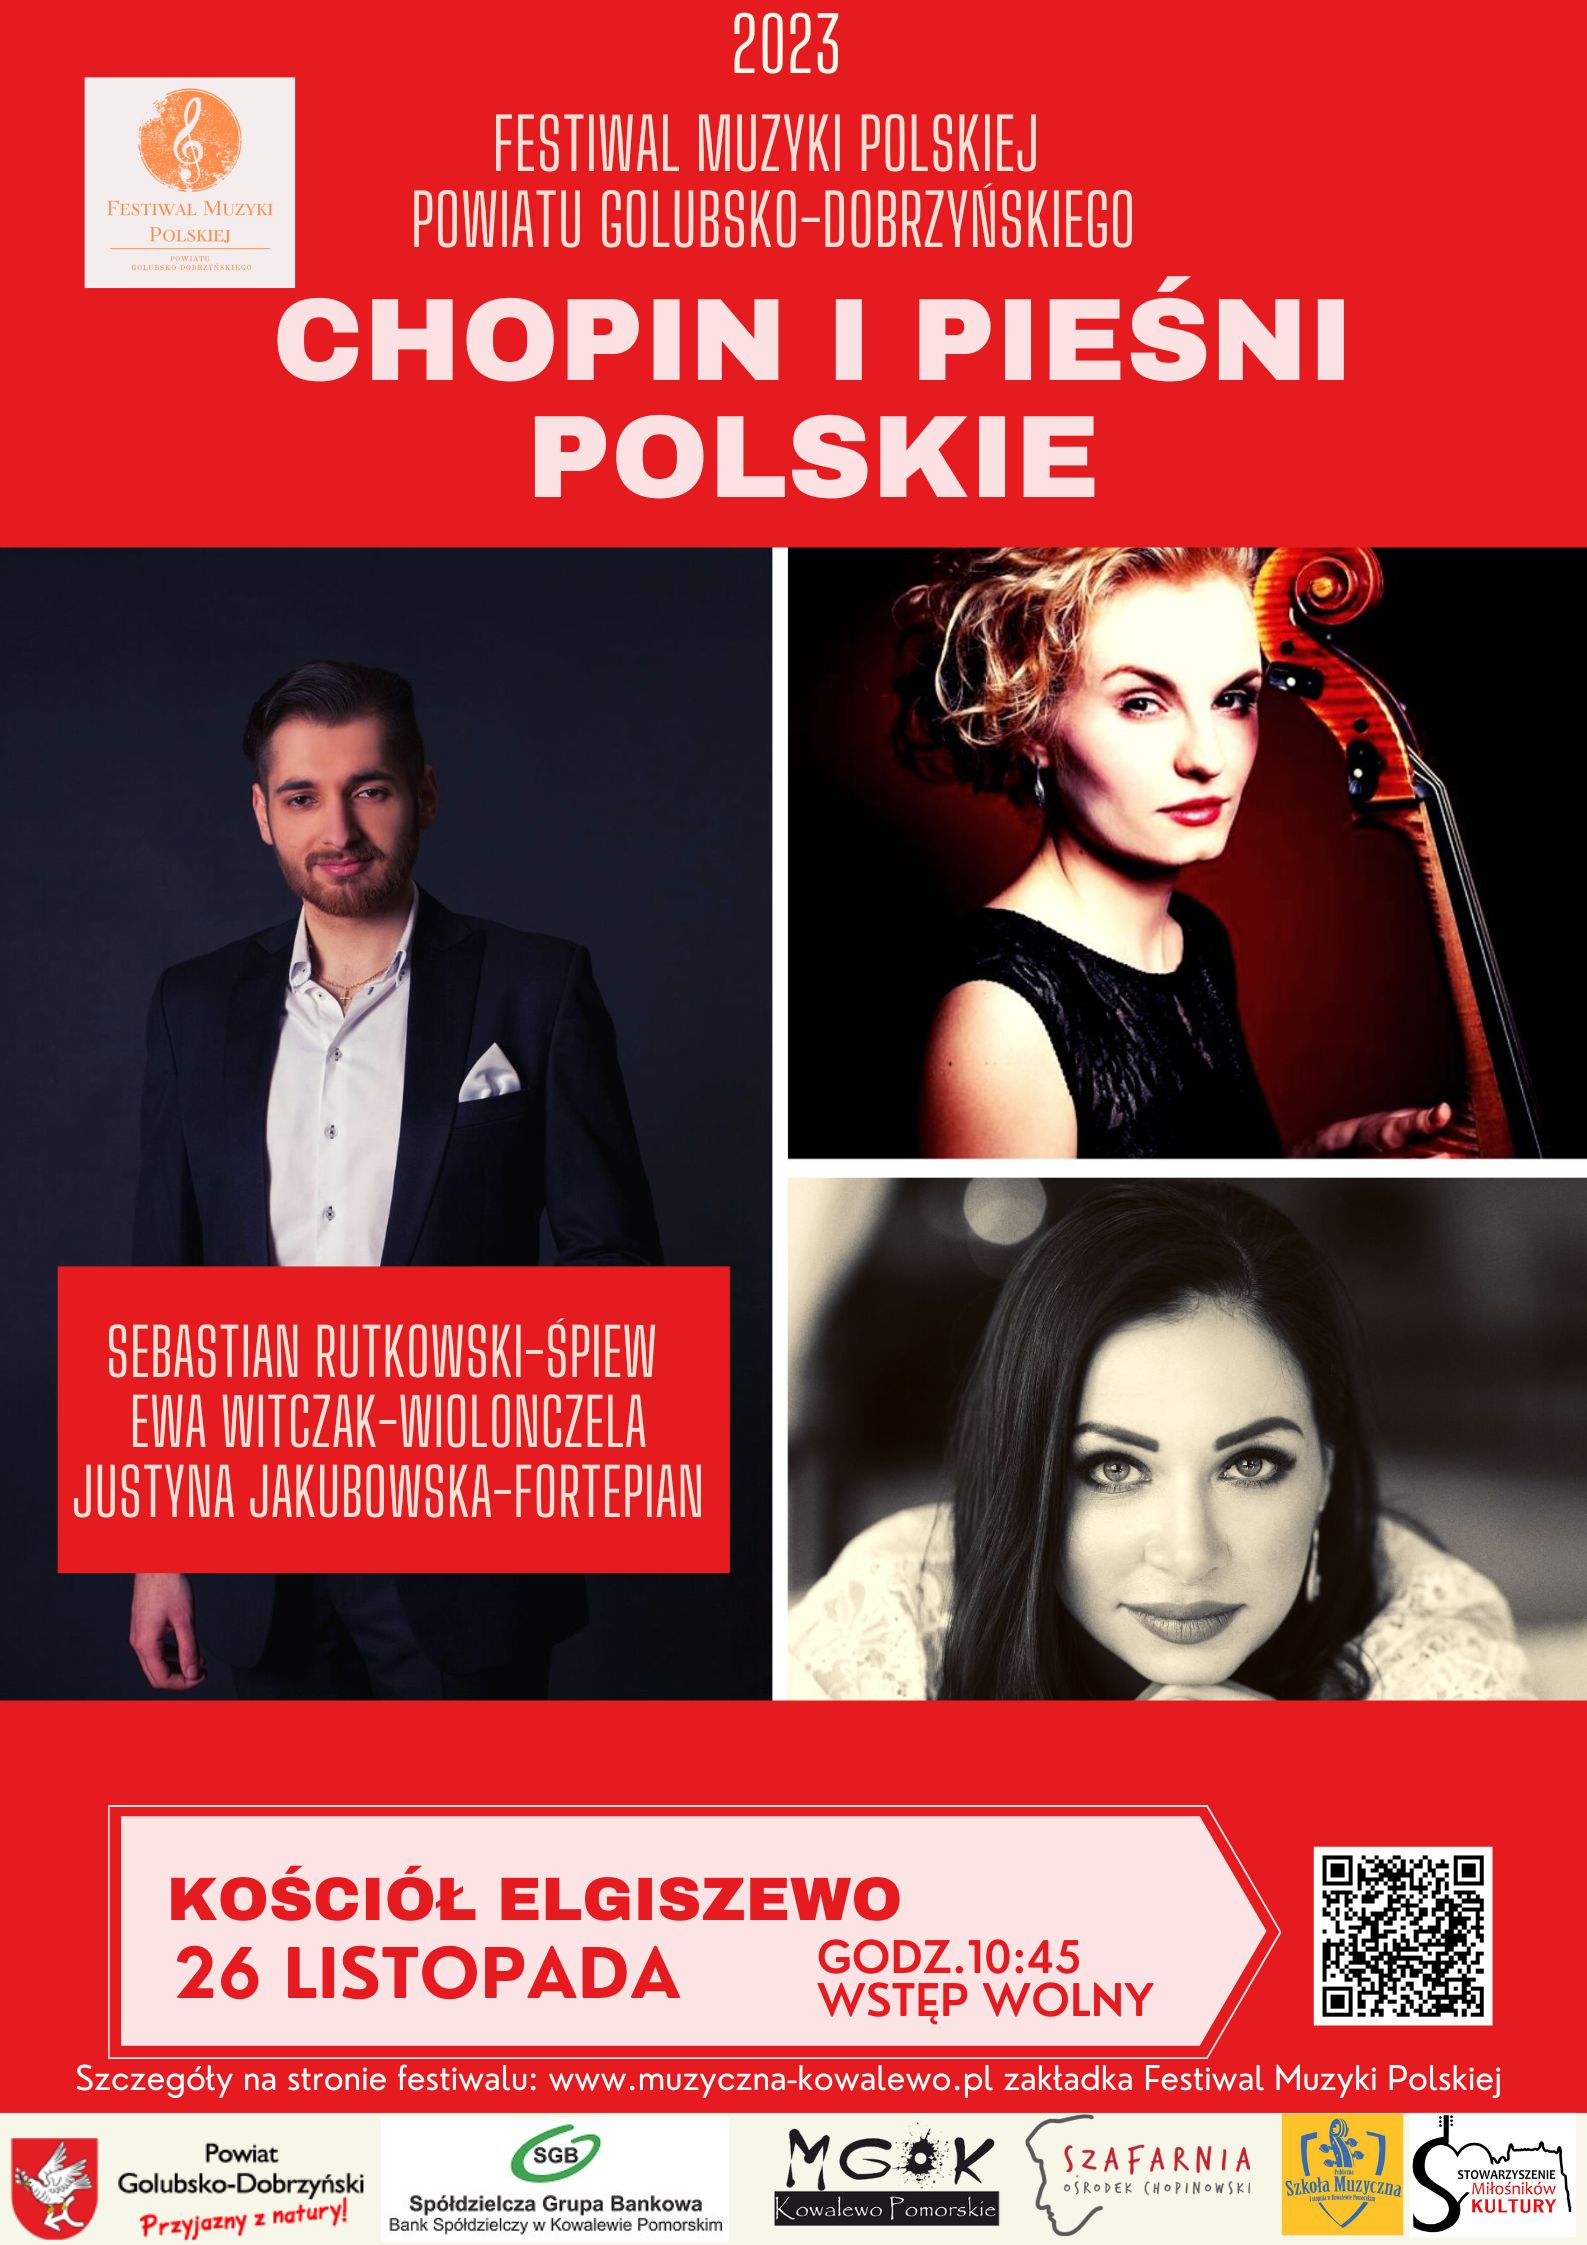 CHOPIN I PIESNI Festiwal Muzyki Polskiej 2023